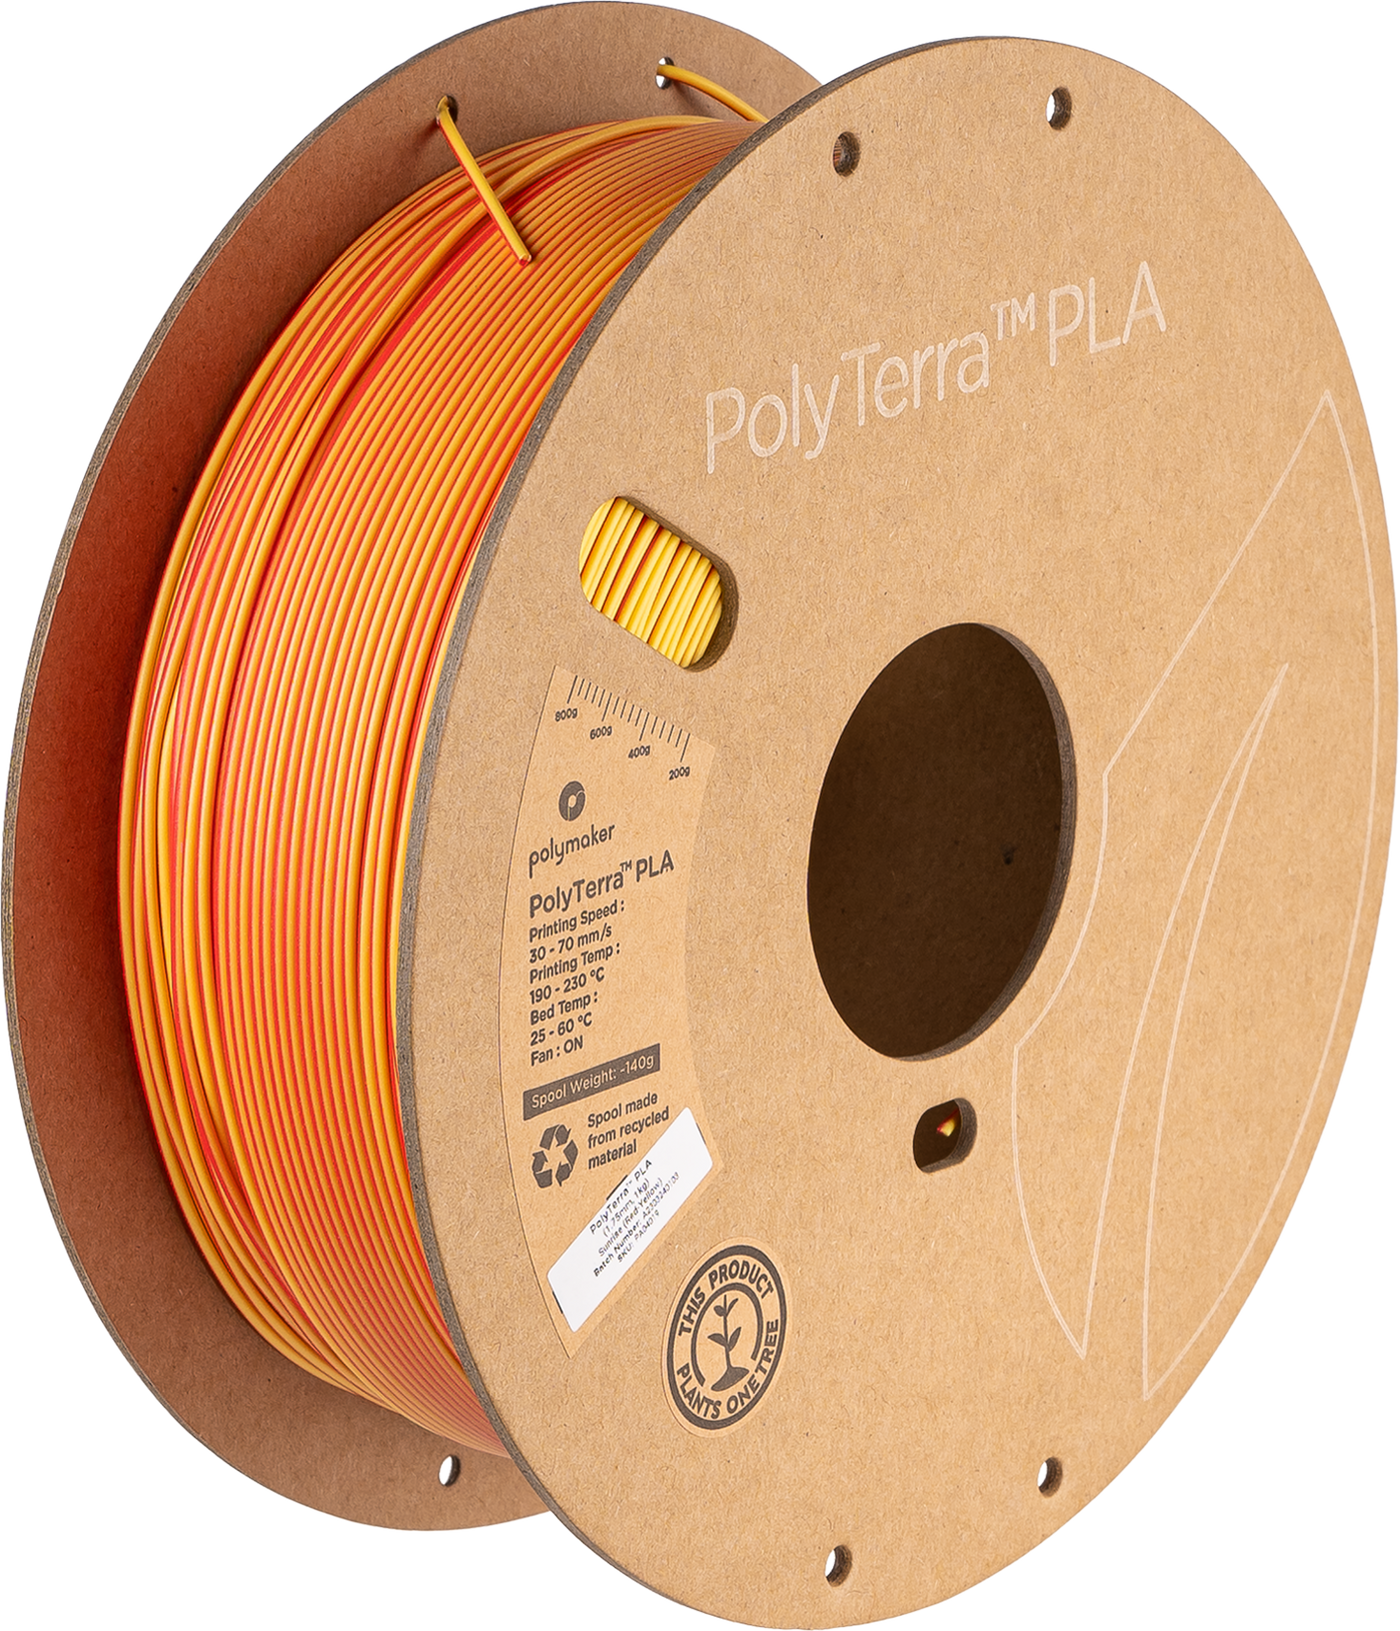 Polymaker PolyTerra PLA Filament Dual Sunrise Red-Yellow 1.75 mm 1KG